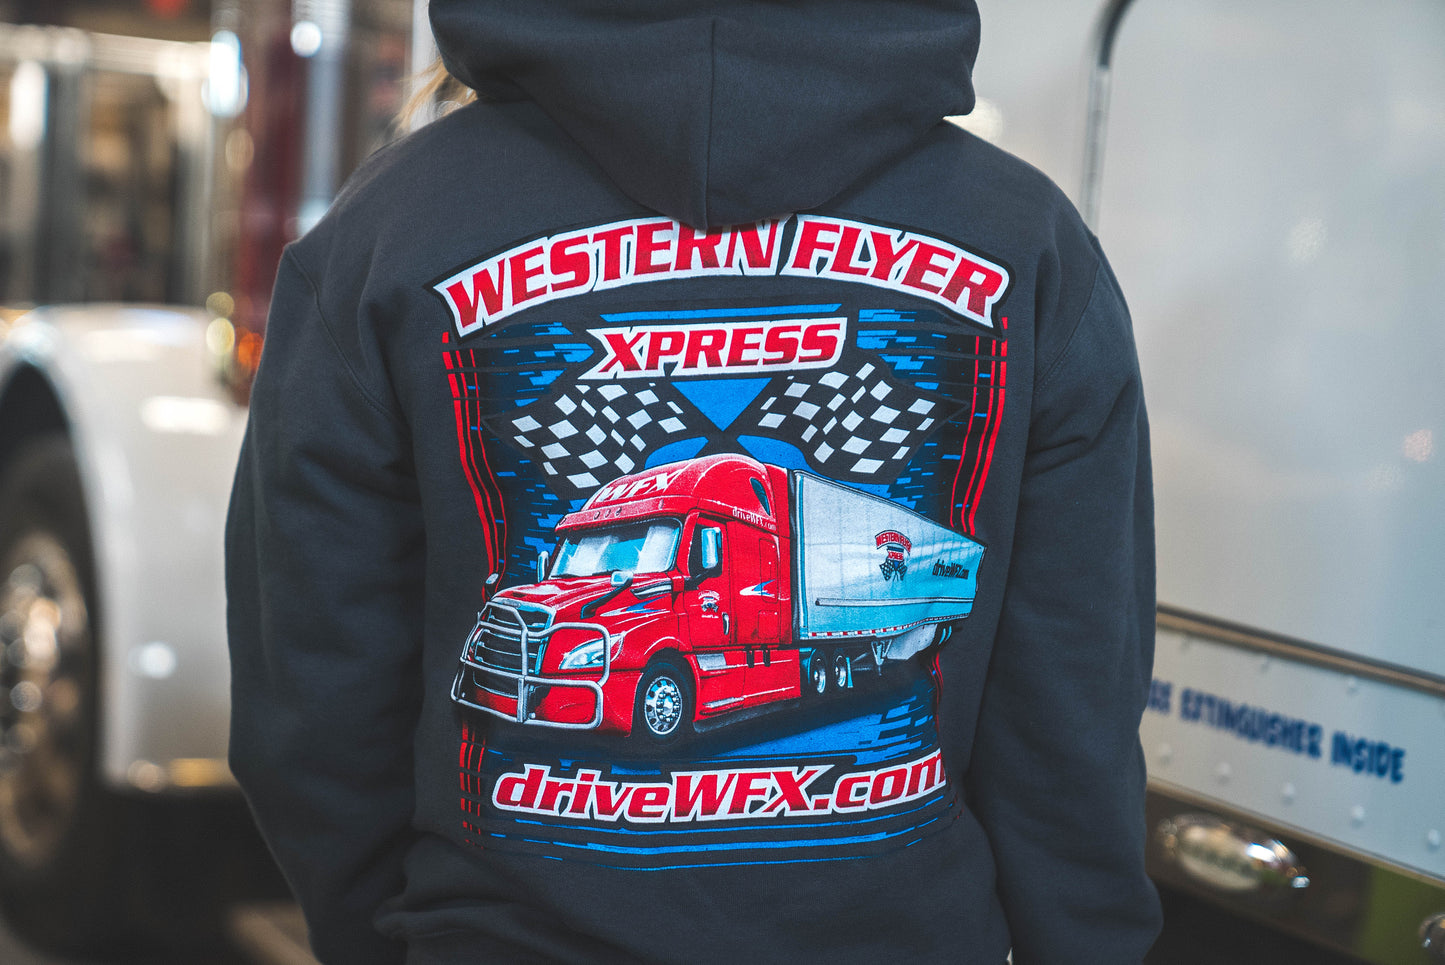 driveWFX "Western Flyer Xpress" - Tshirt (Charcoal Grey)